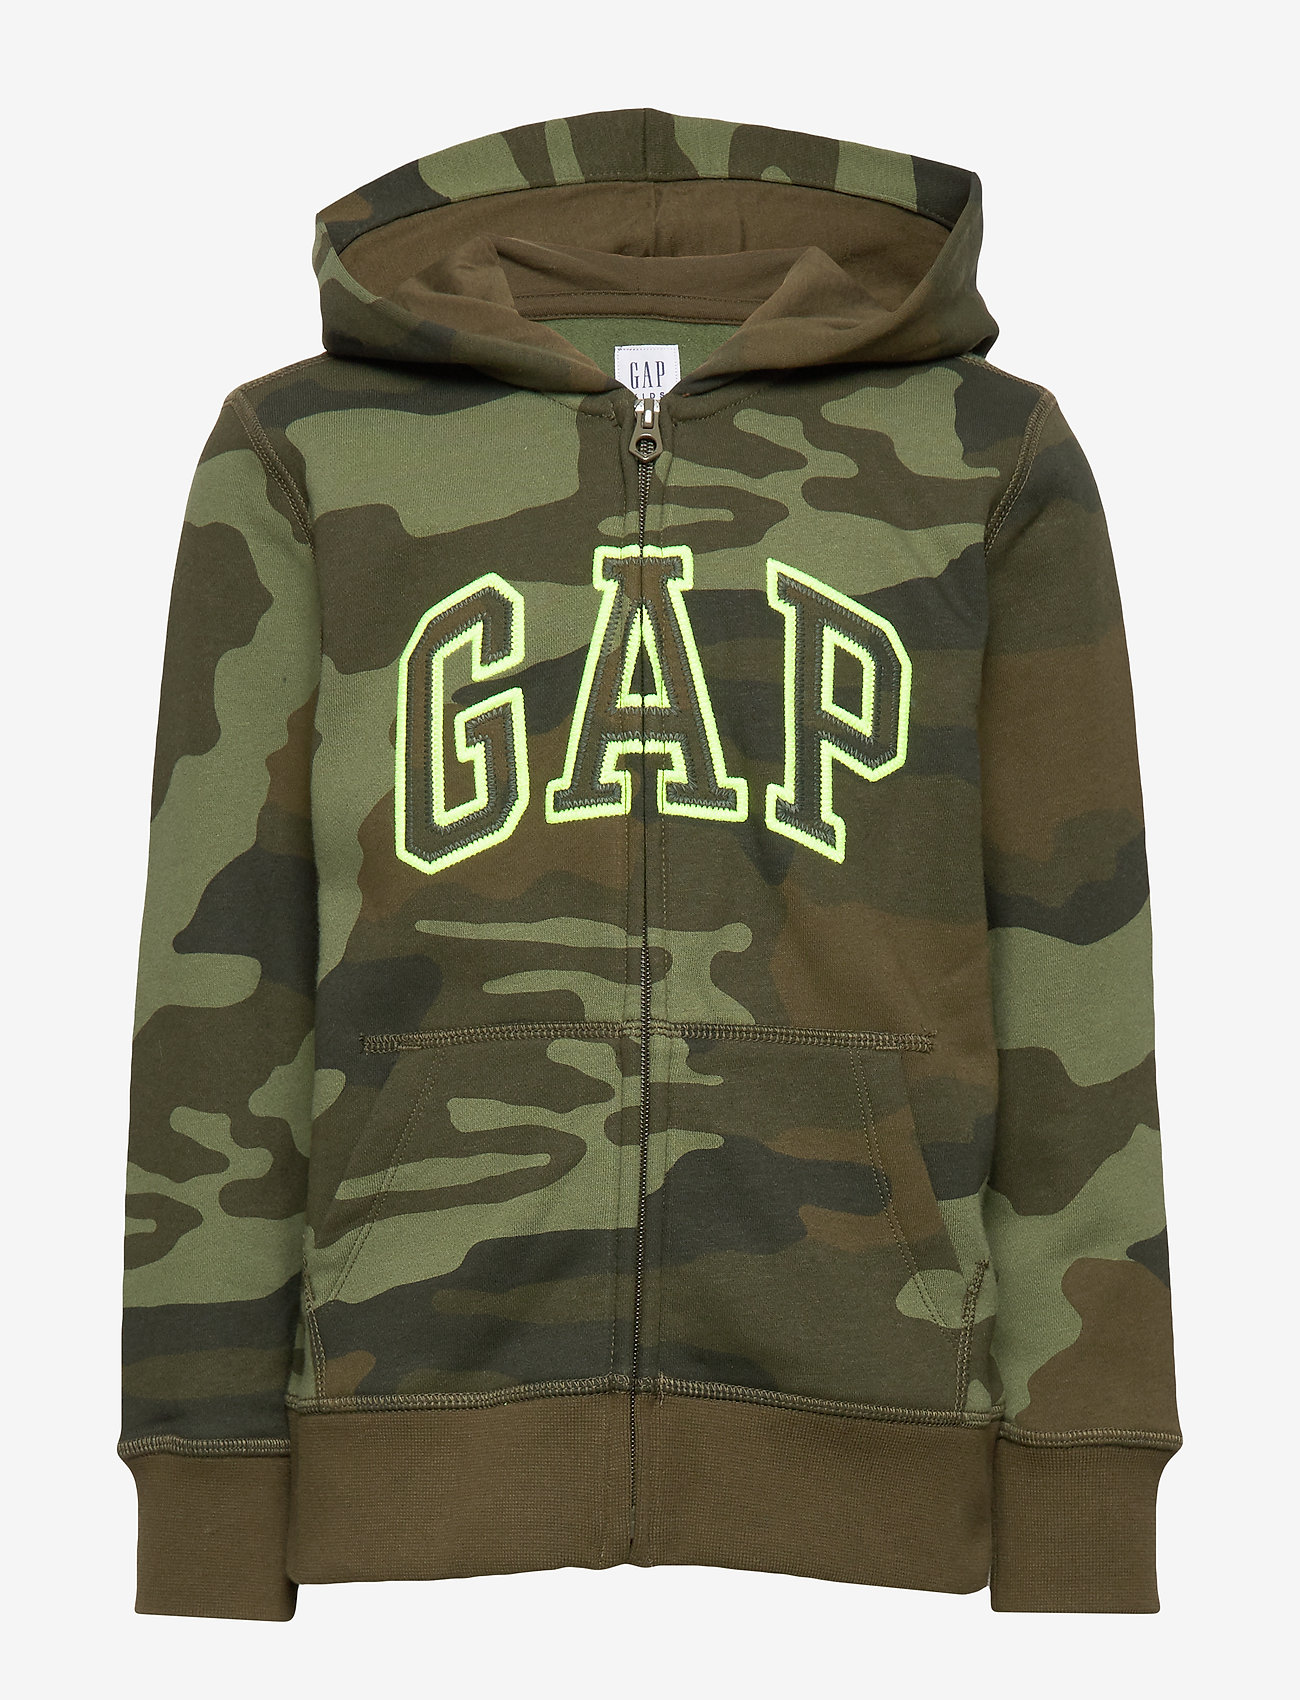 green gap sweatshirt